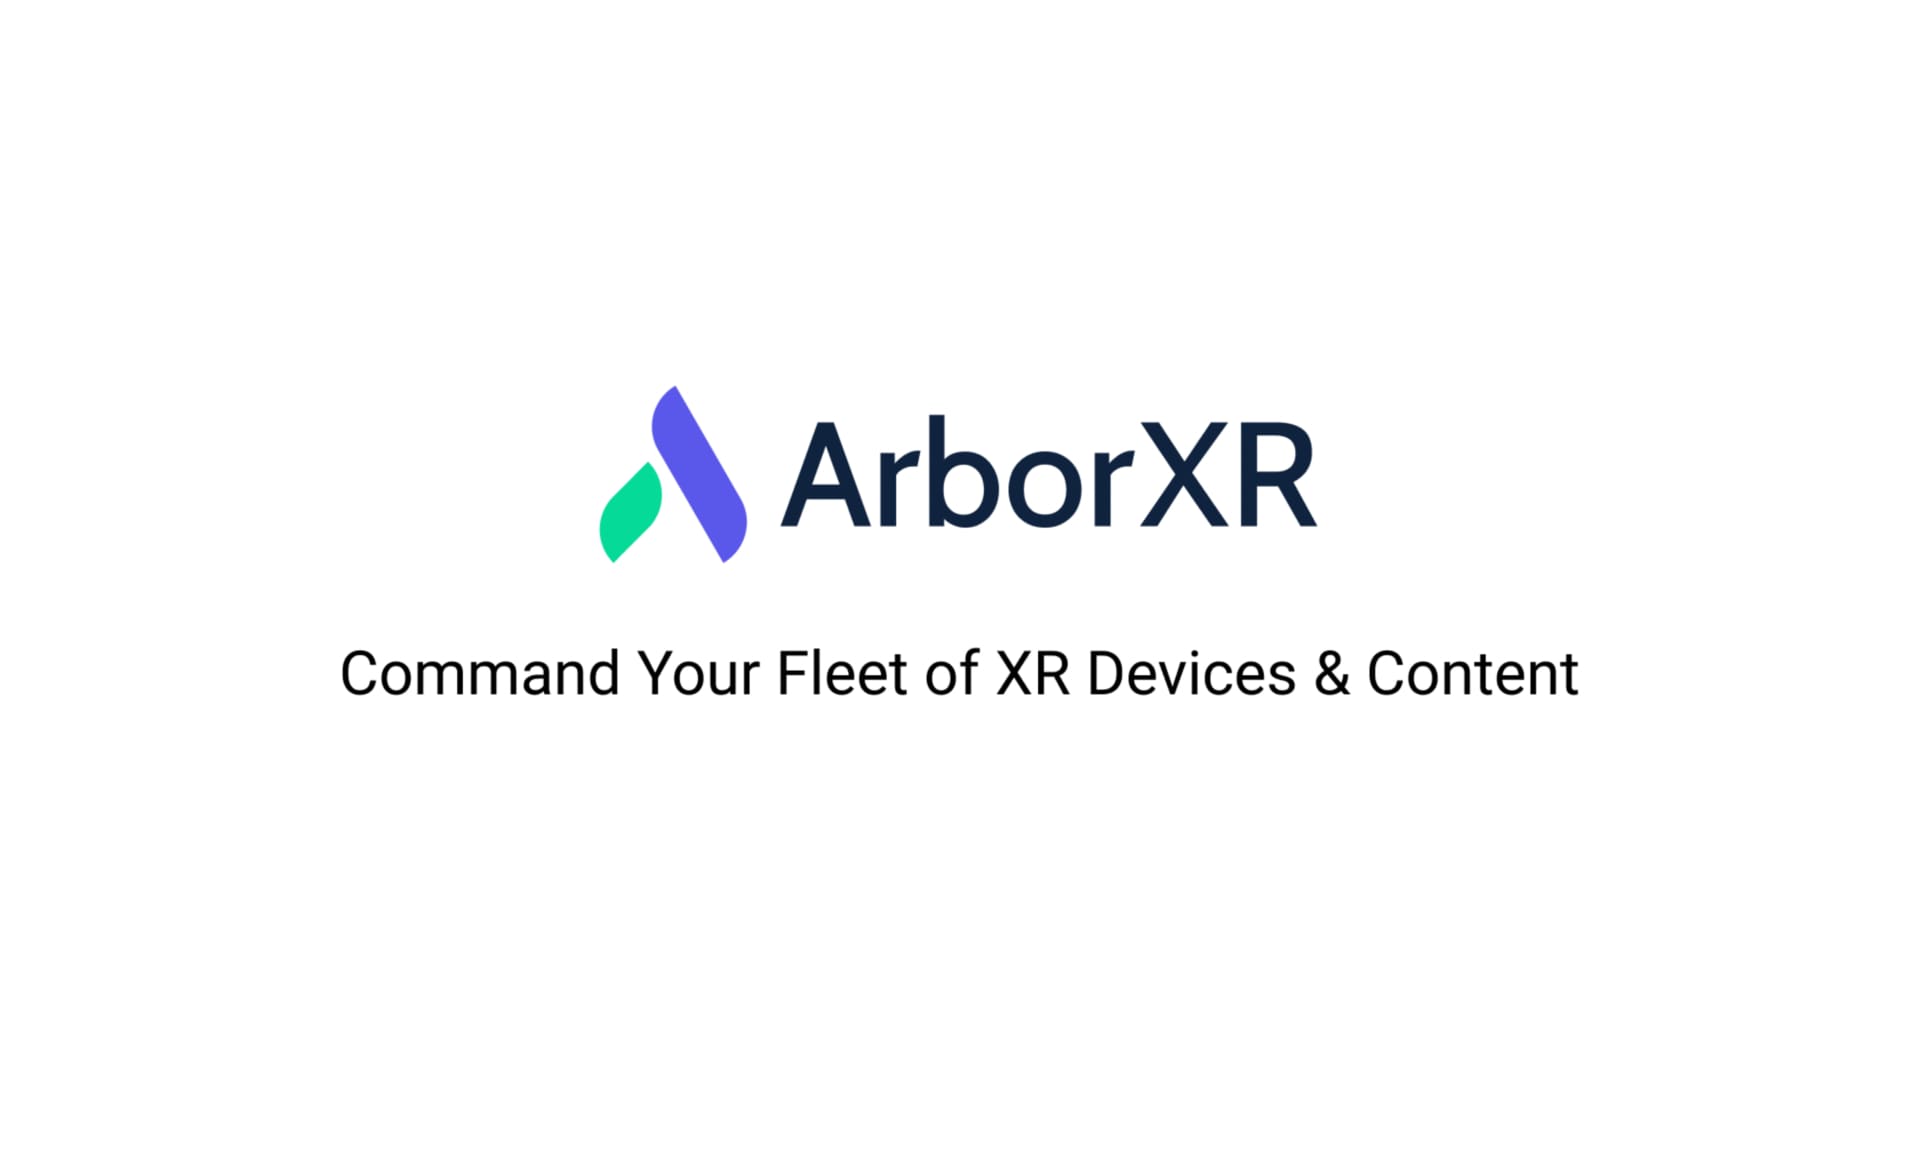 ArborXR Device Management Subscription-1 Year-Essential Plan